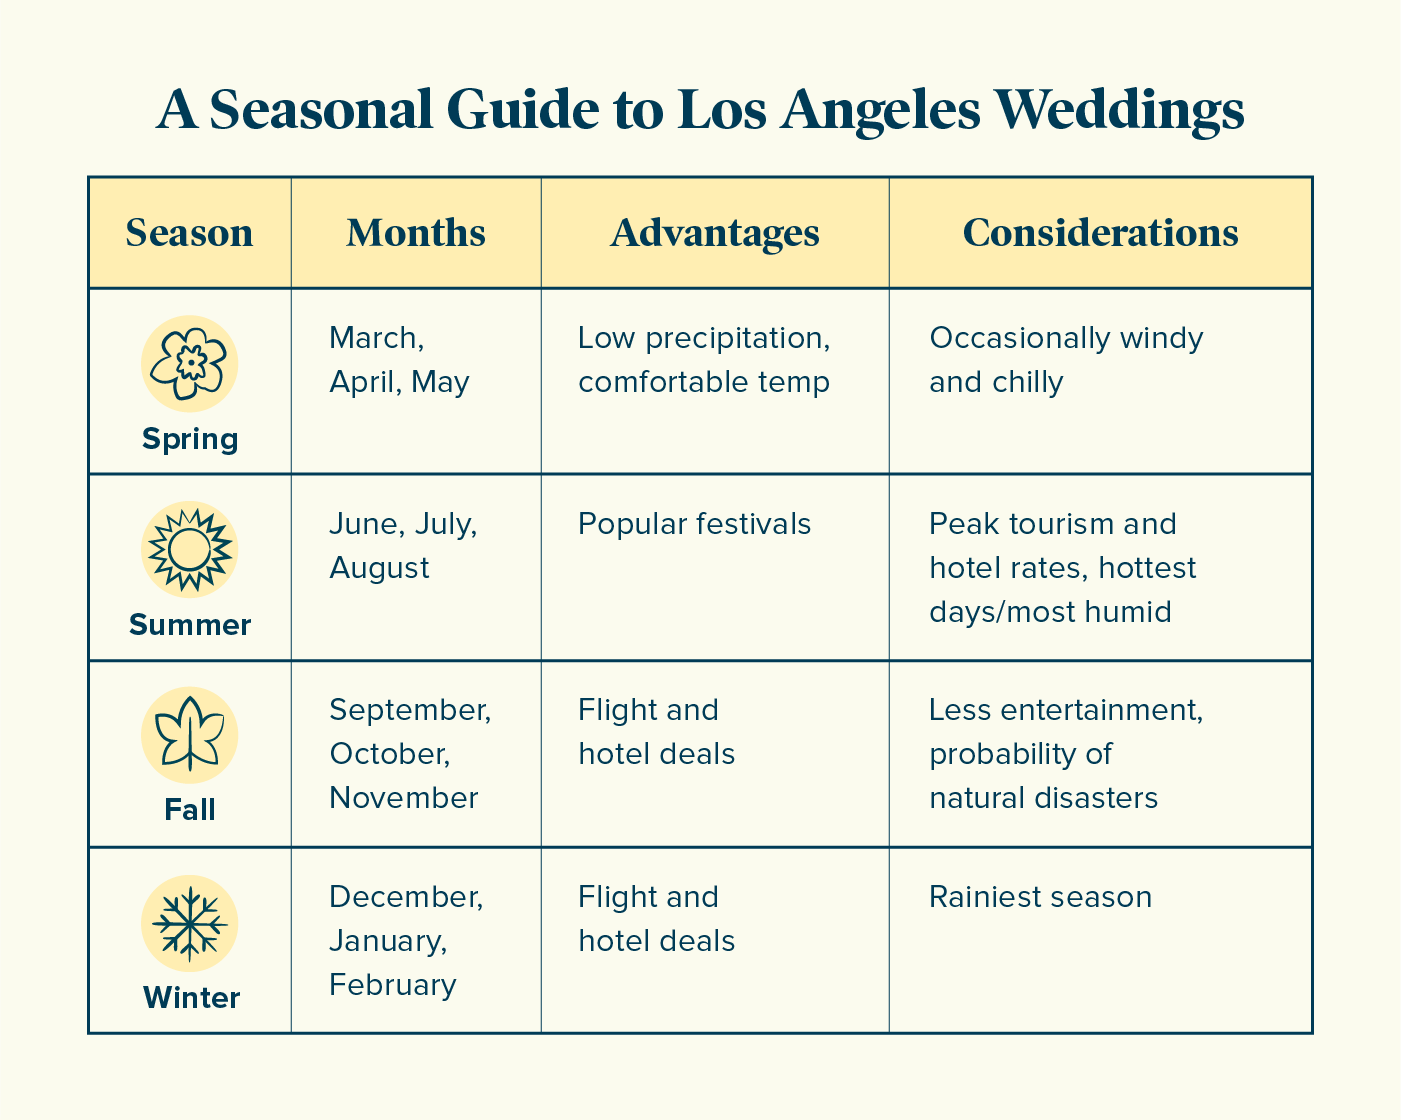 Seasonal guide to LA weddings chart